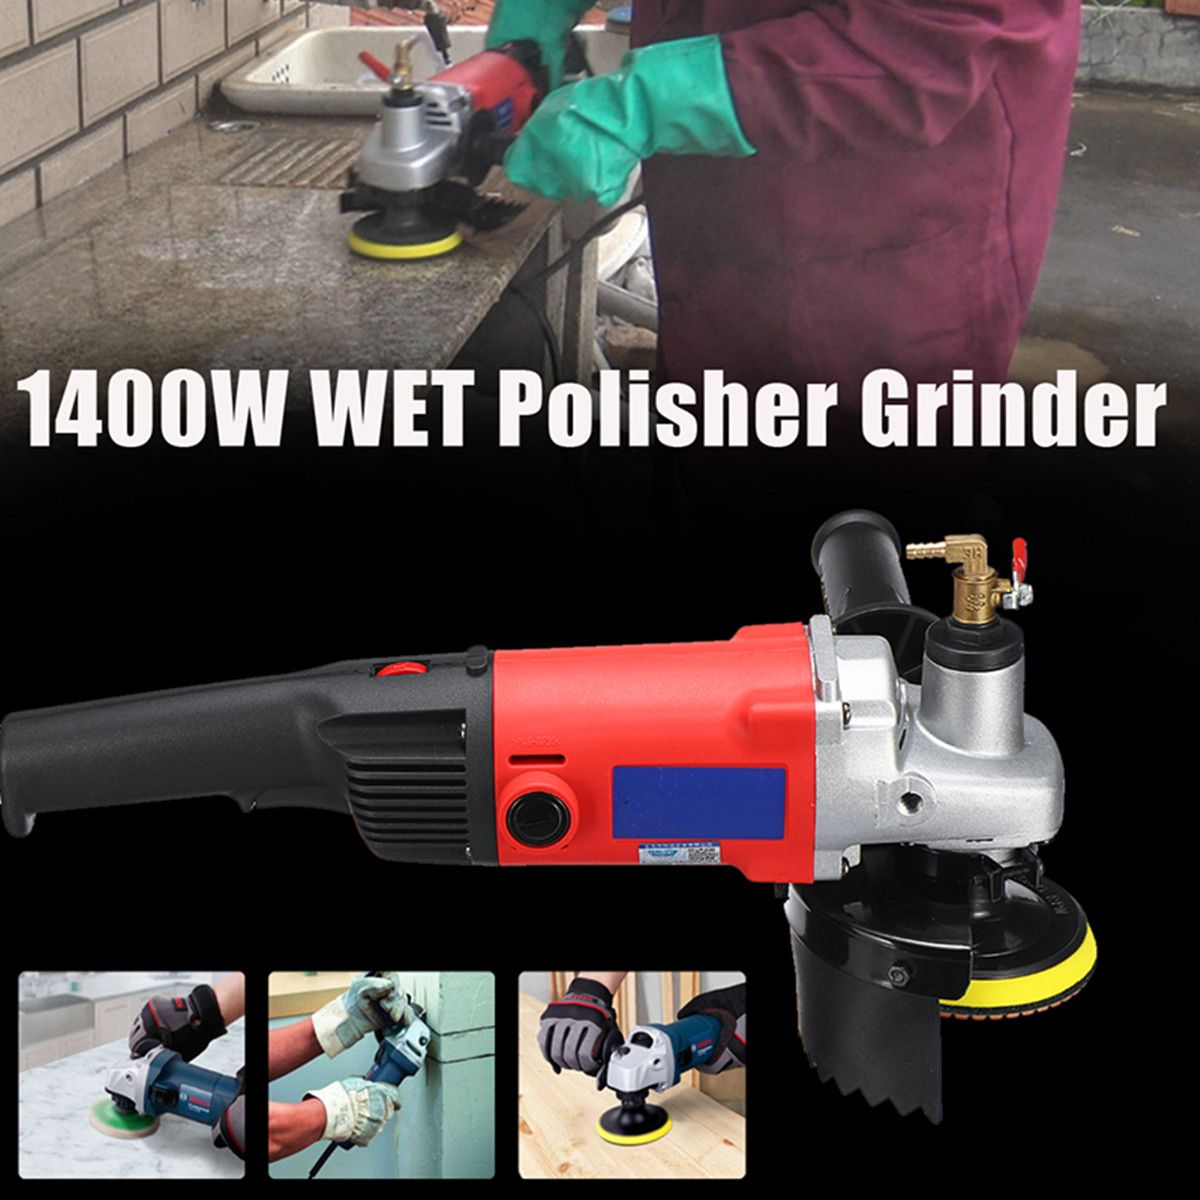 1400W-Wet-Polisher-Grinder-Speed-Adjustable-Diamond-Polishing-Pads-Kit-Grinding-Machine-Tool-Concret-1393985